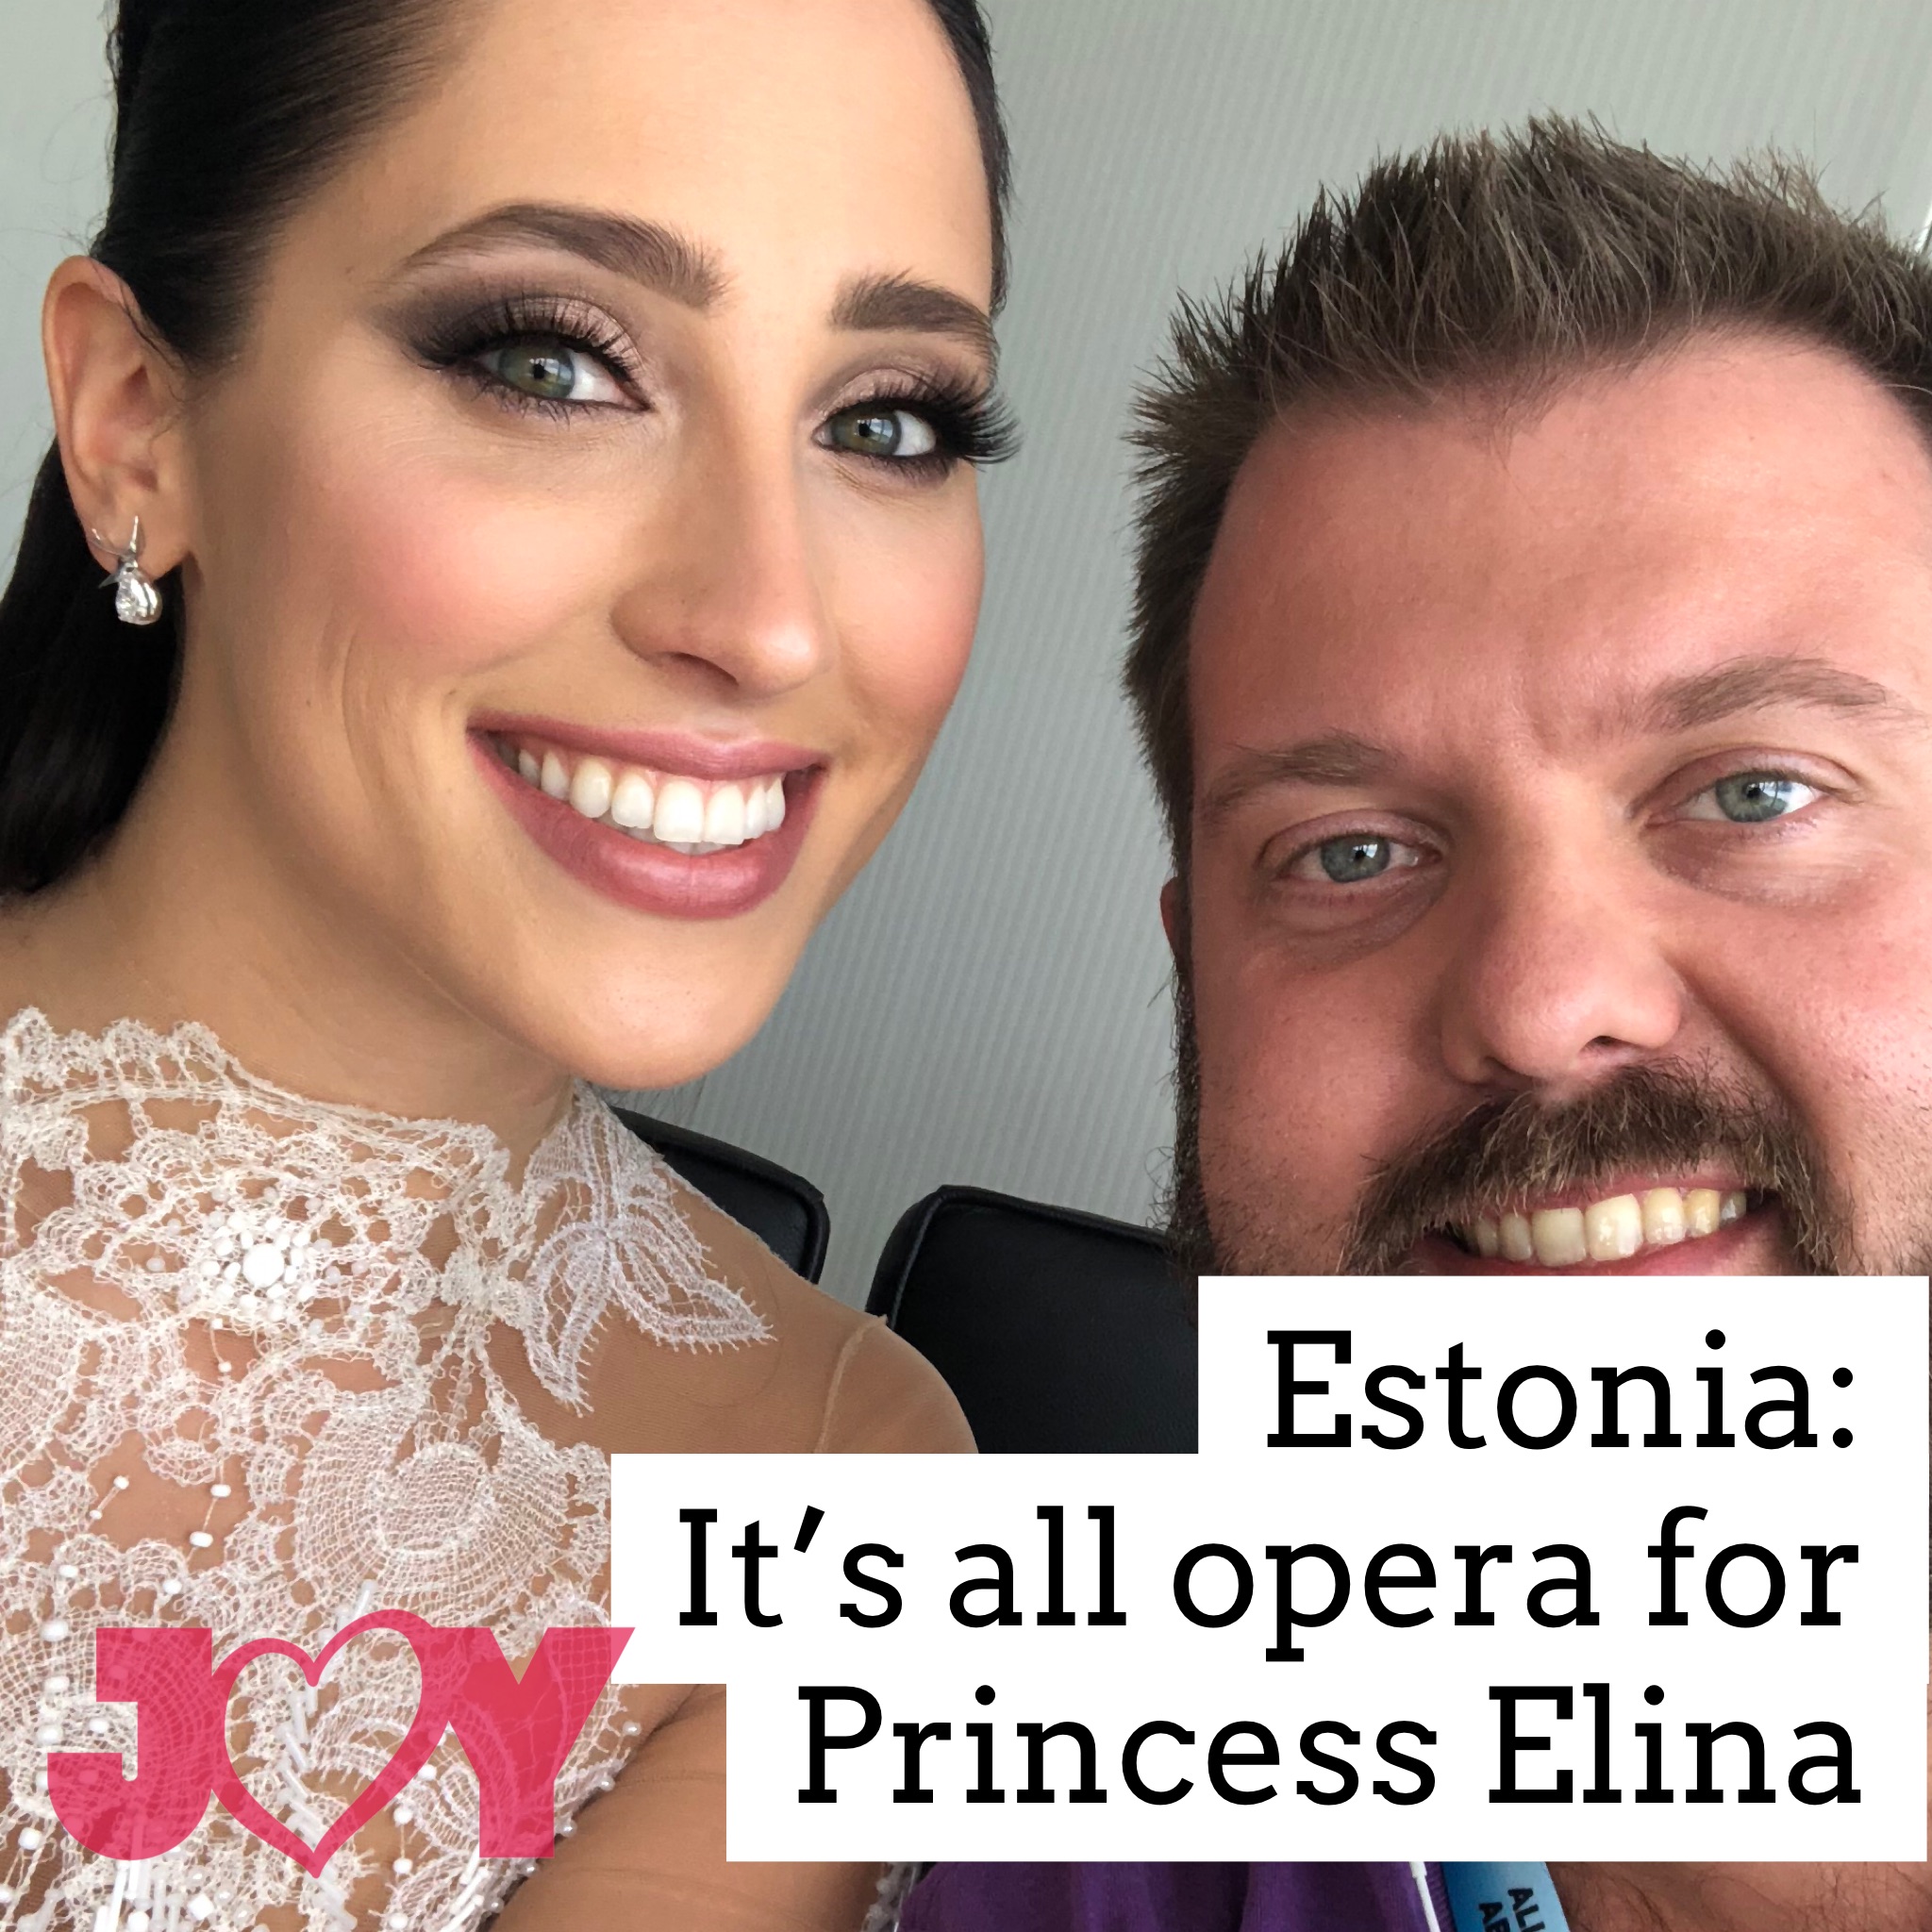 Estonia: It’s all opera for Princess Elina